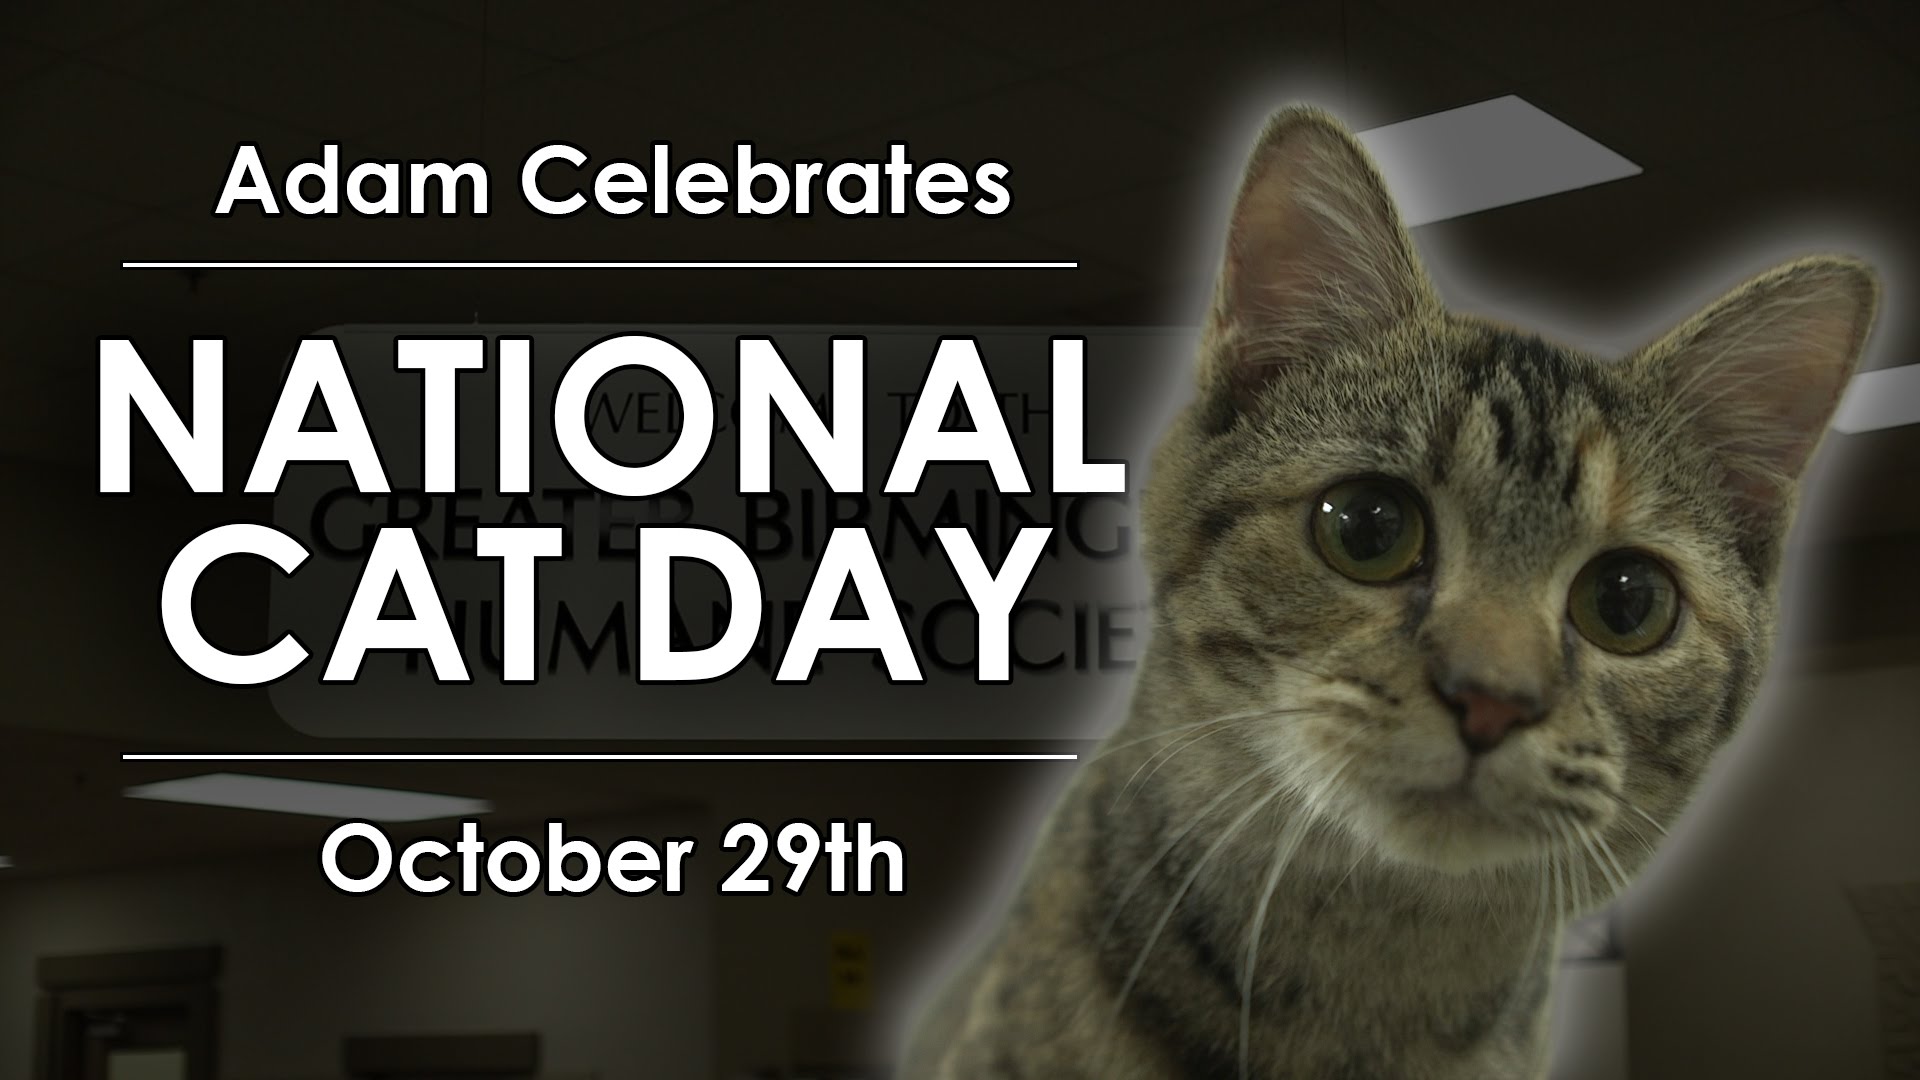 Adam Celebrates National Cat Day October 29th